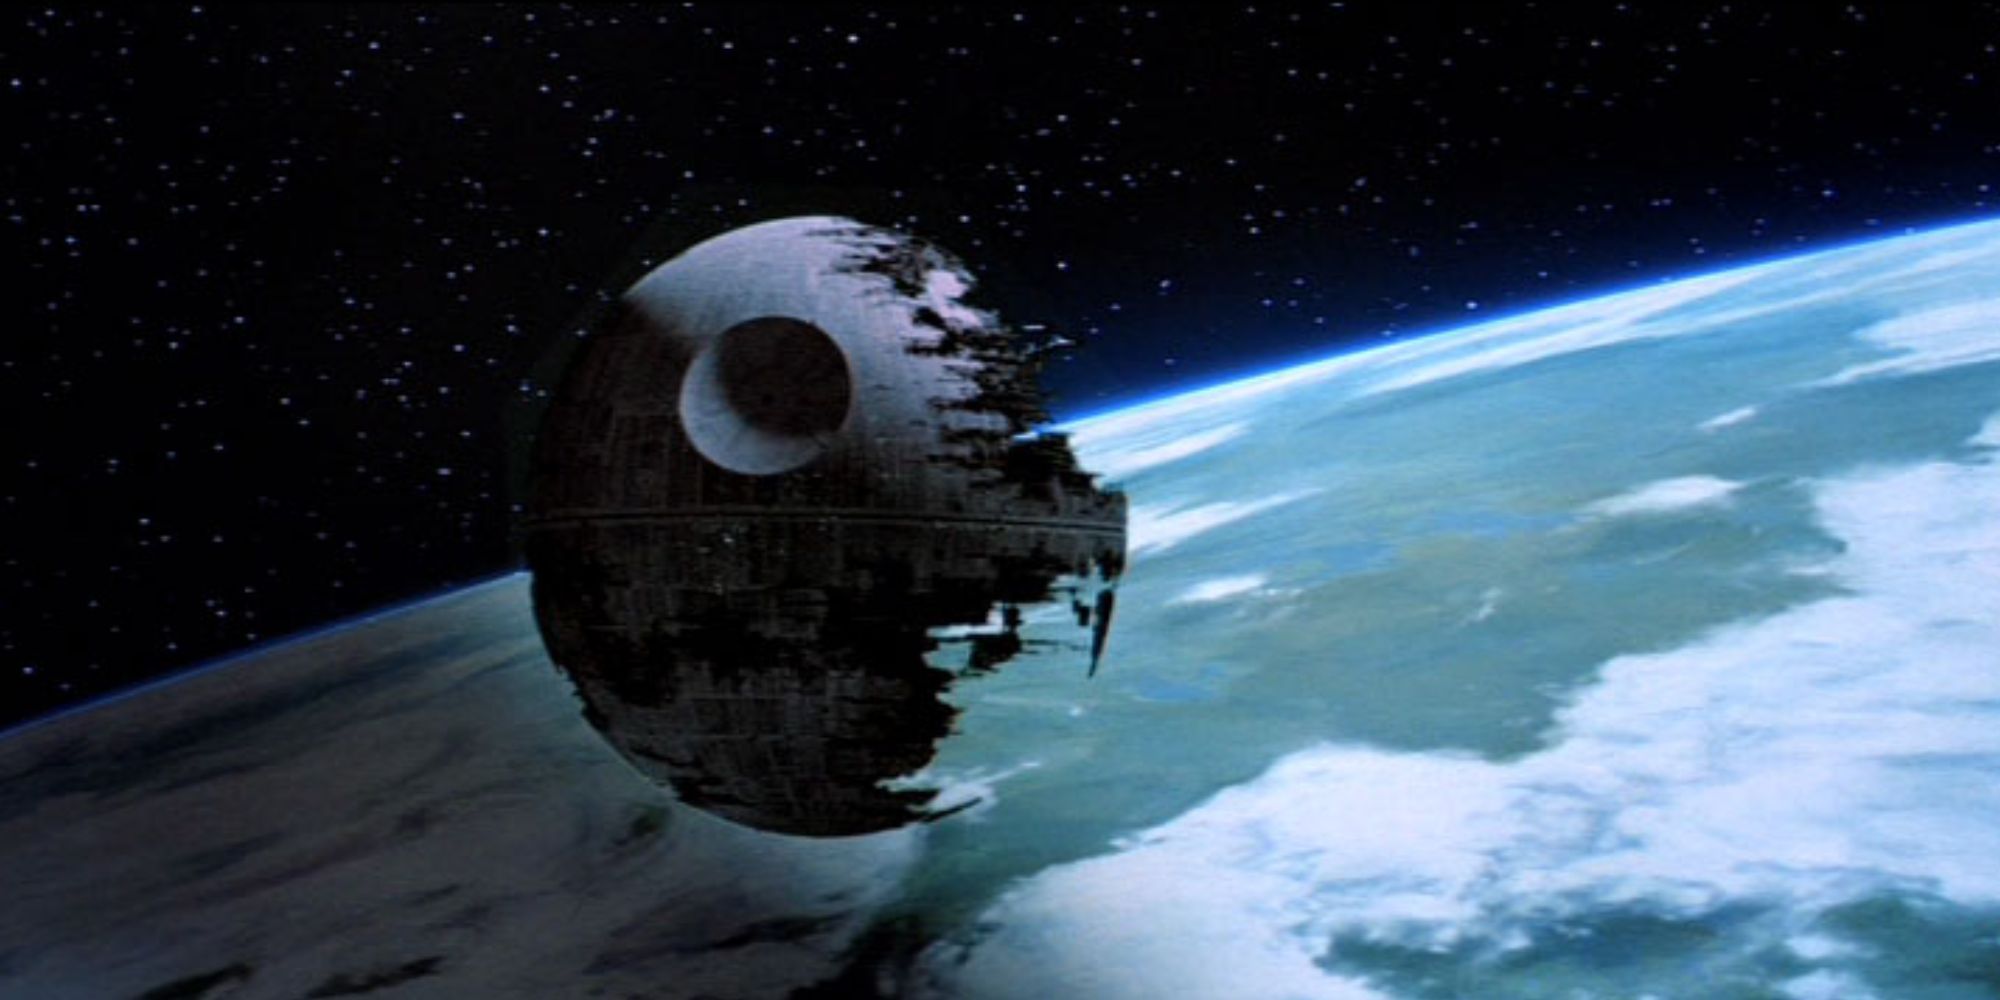 The Death Star II orbits Endor